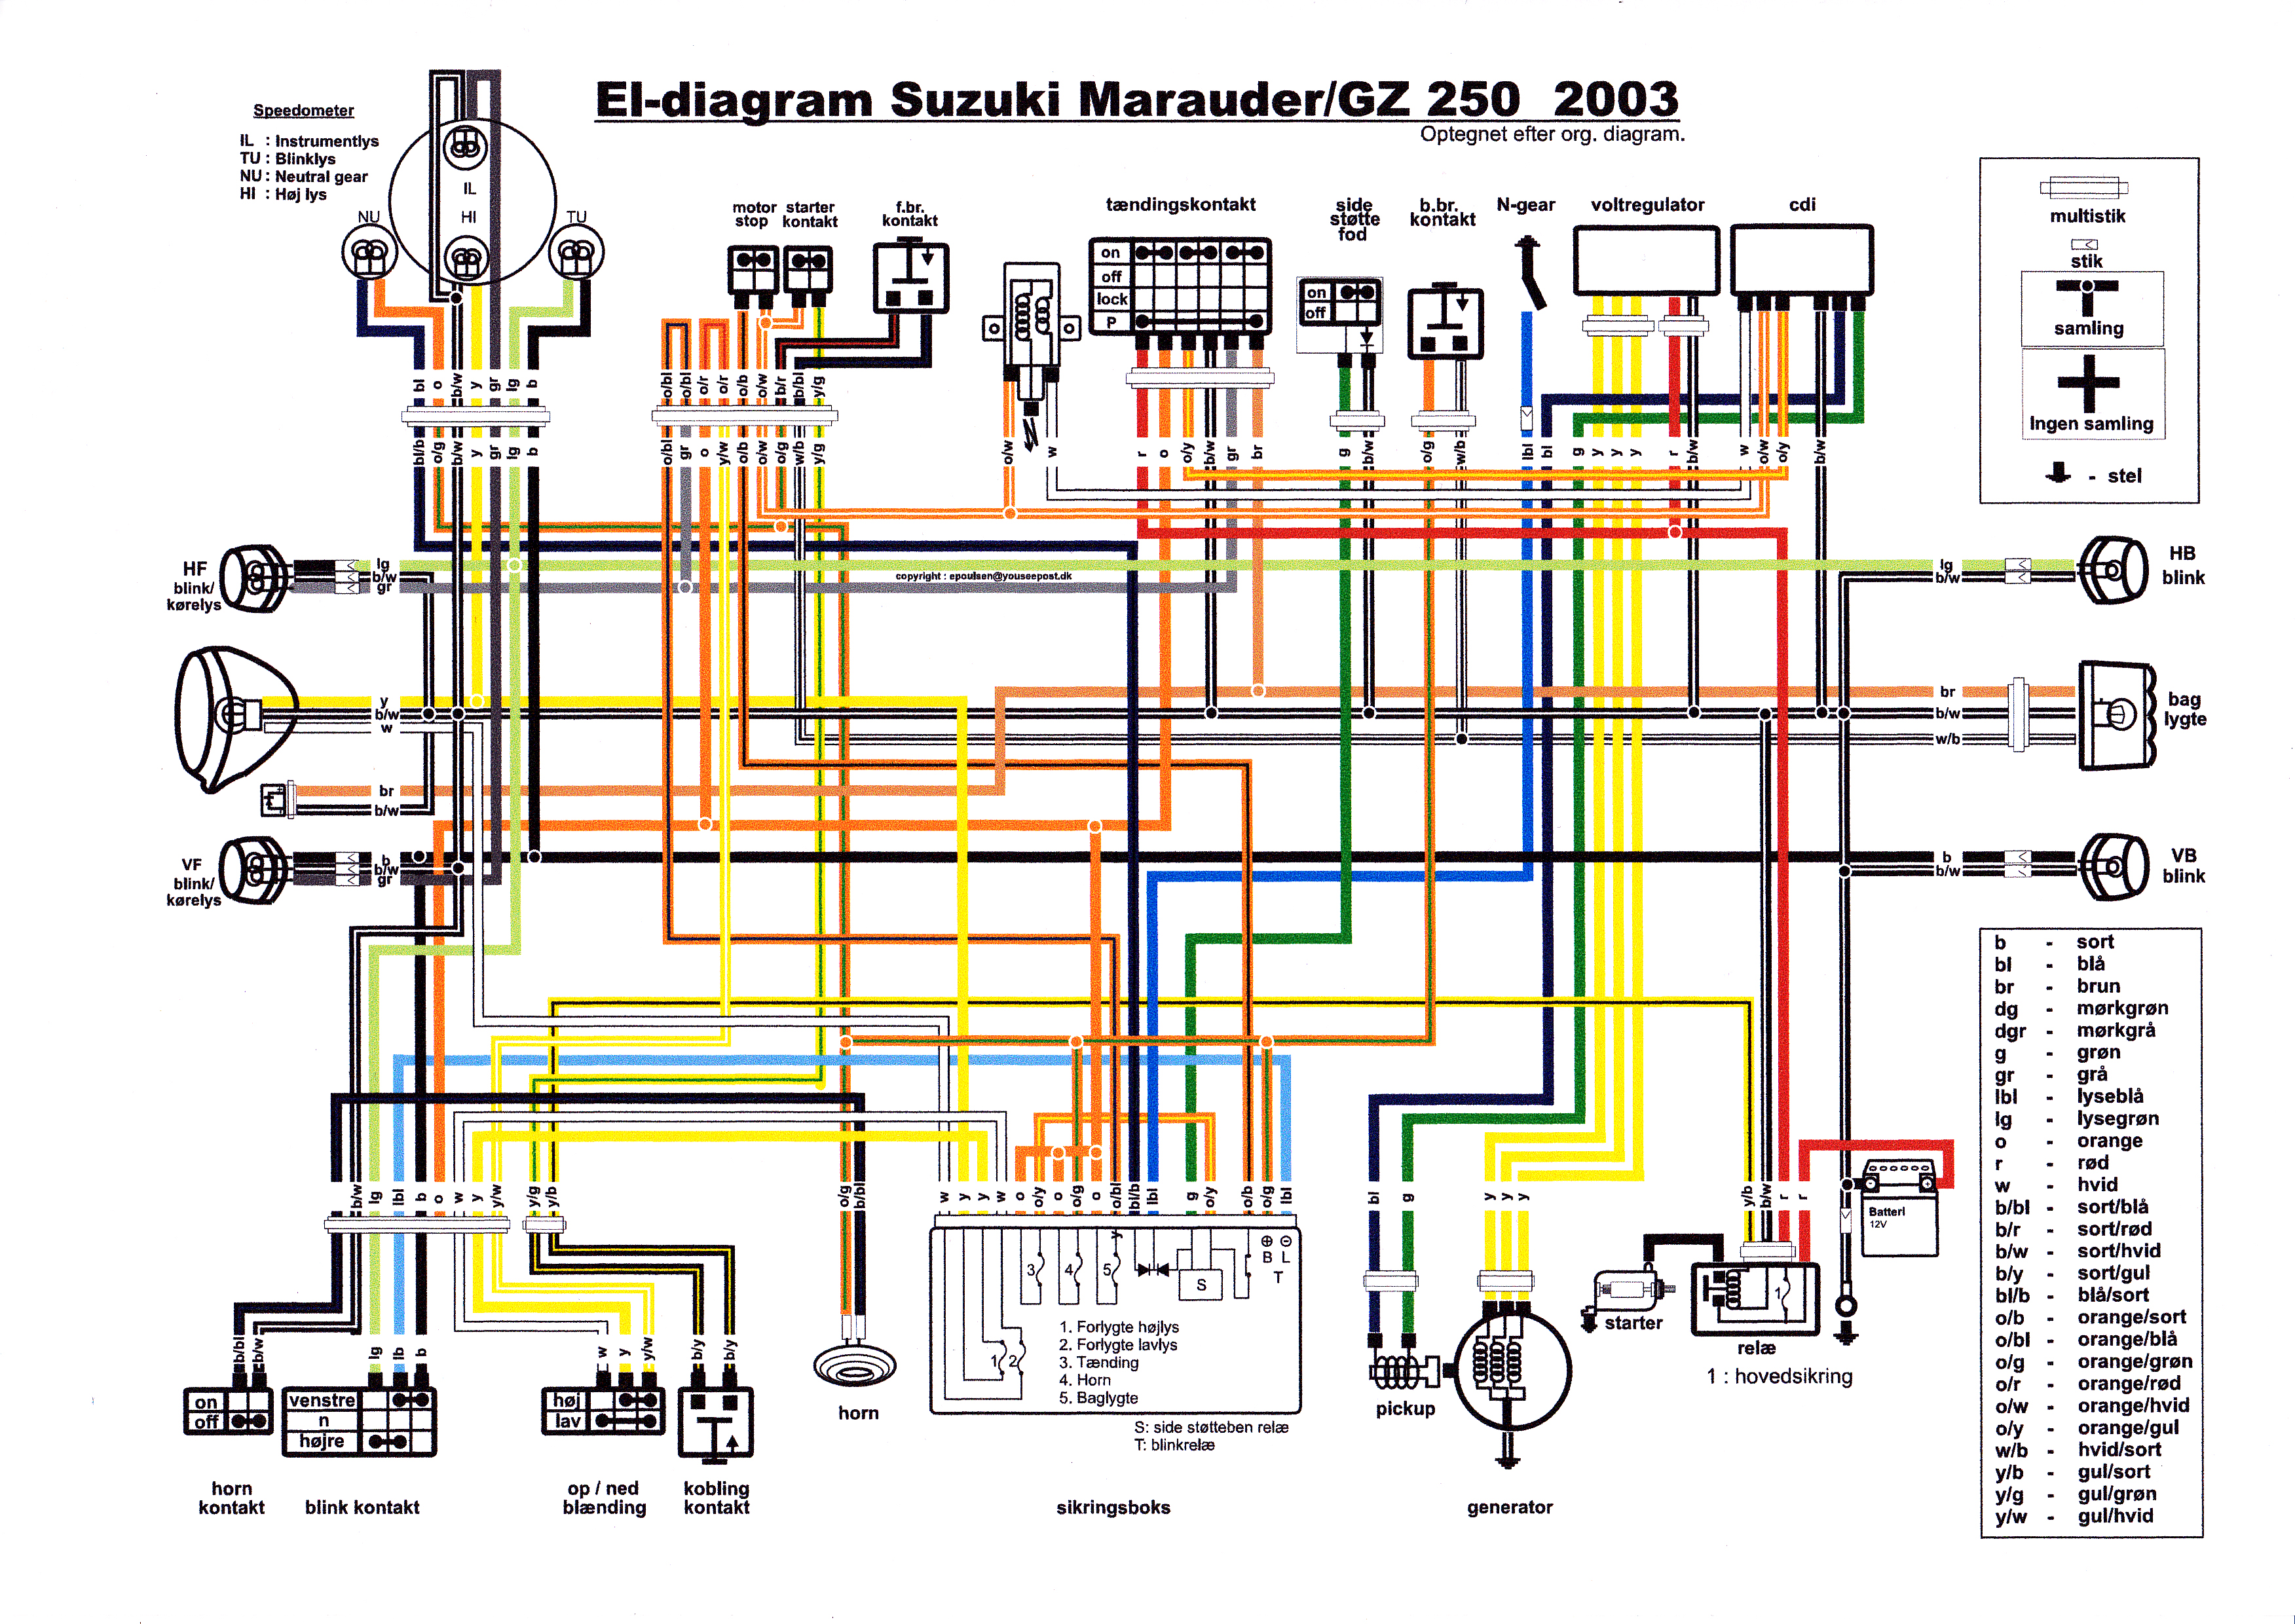 Diagram Suzuki GZ 250 2003